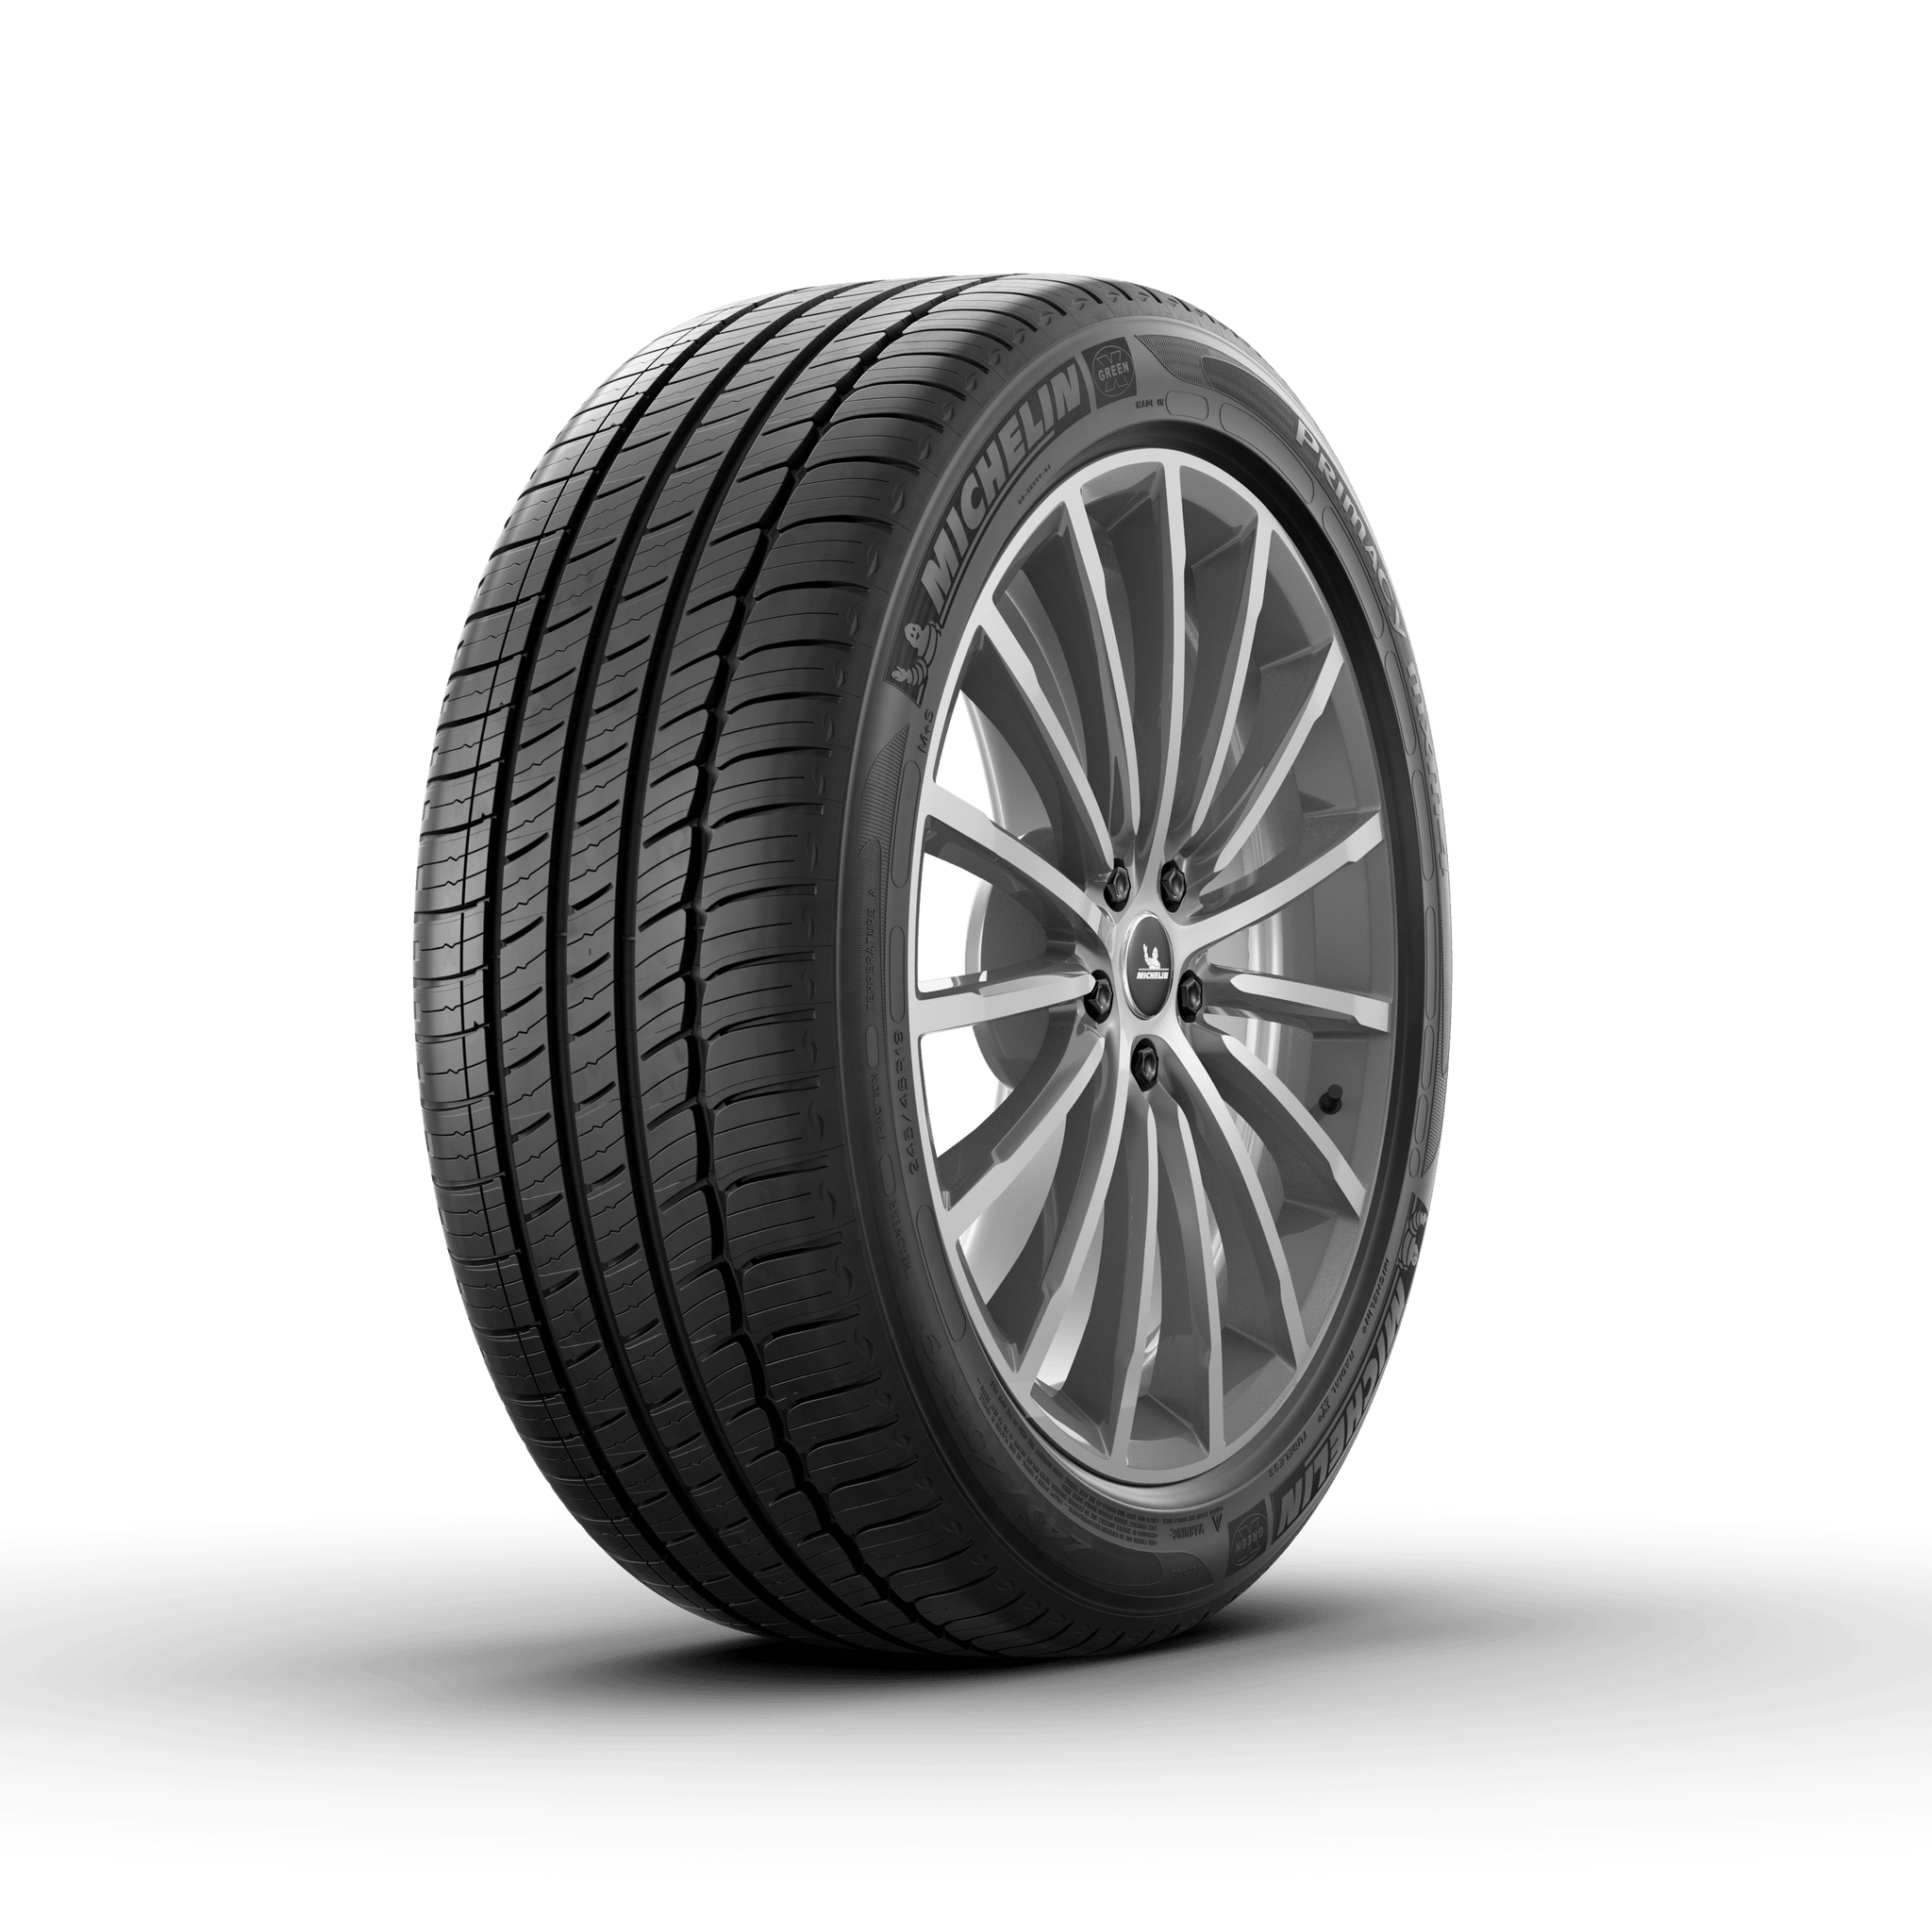 MICHELIN PRIMACY MXM4 245/45R18 (26.7X9.7R 18) Tires